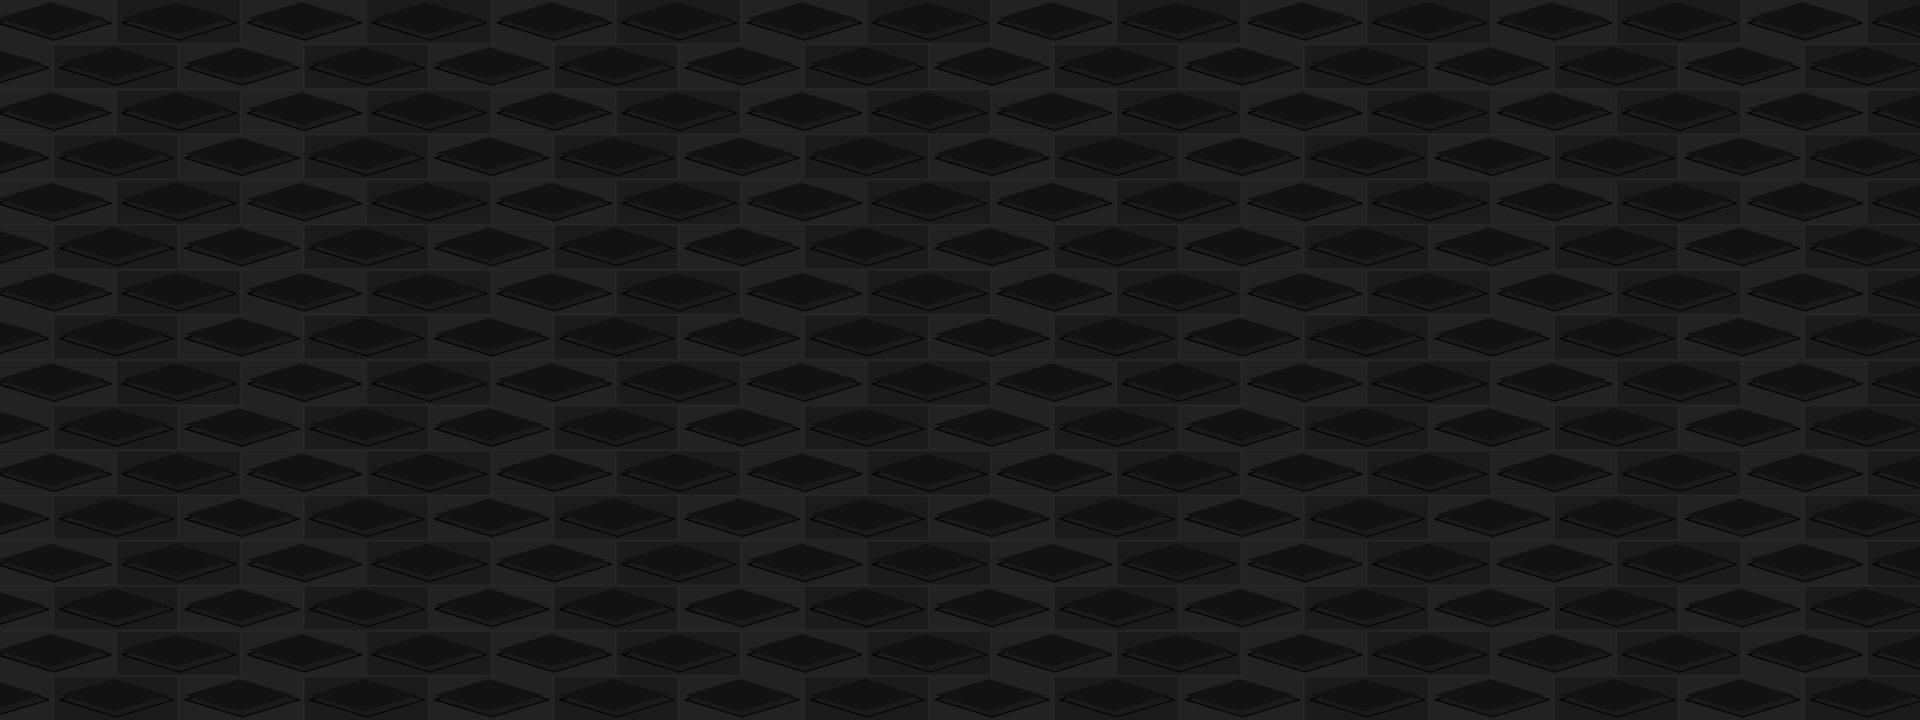 abstracte achtergrond textuur patroon zwart oppervlak achtergrond vector illustratie